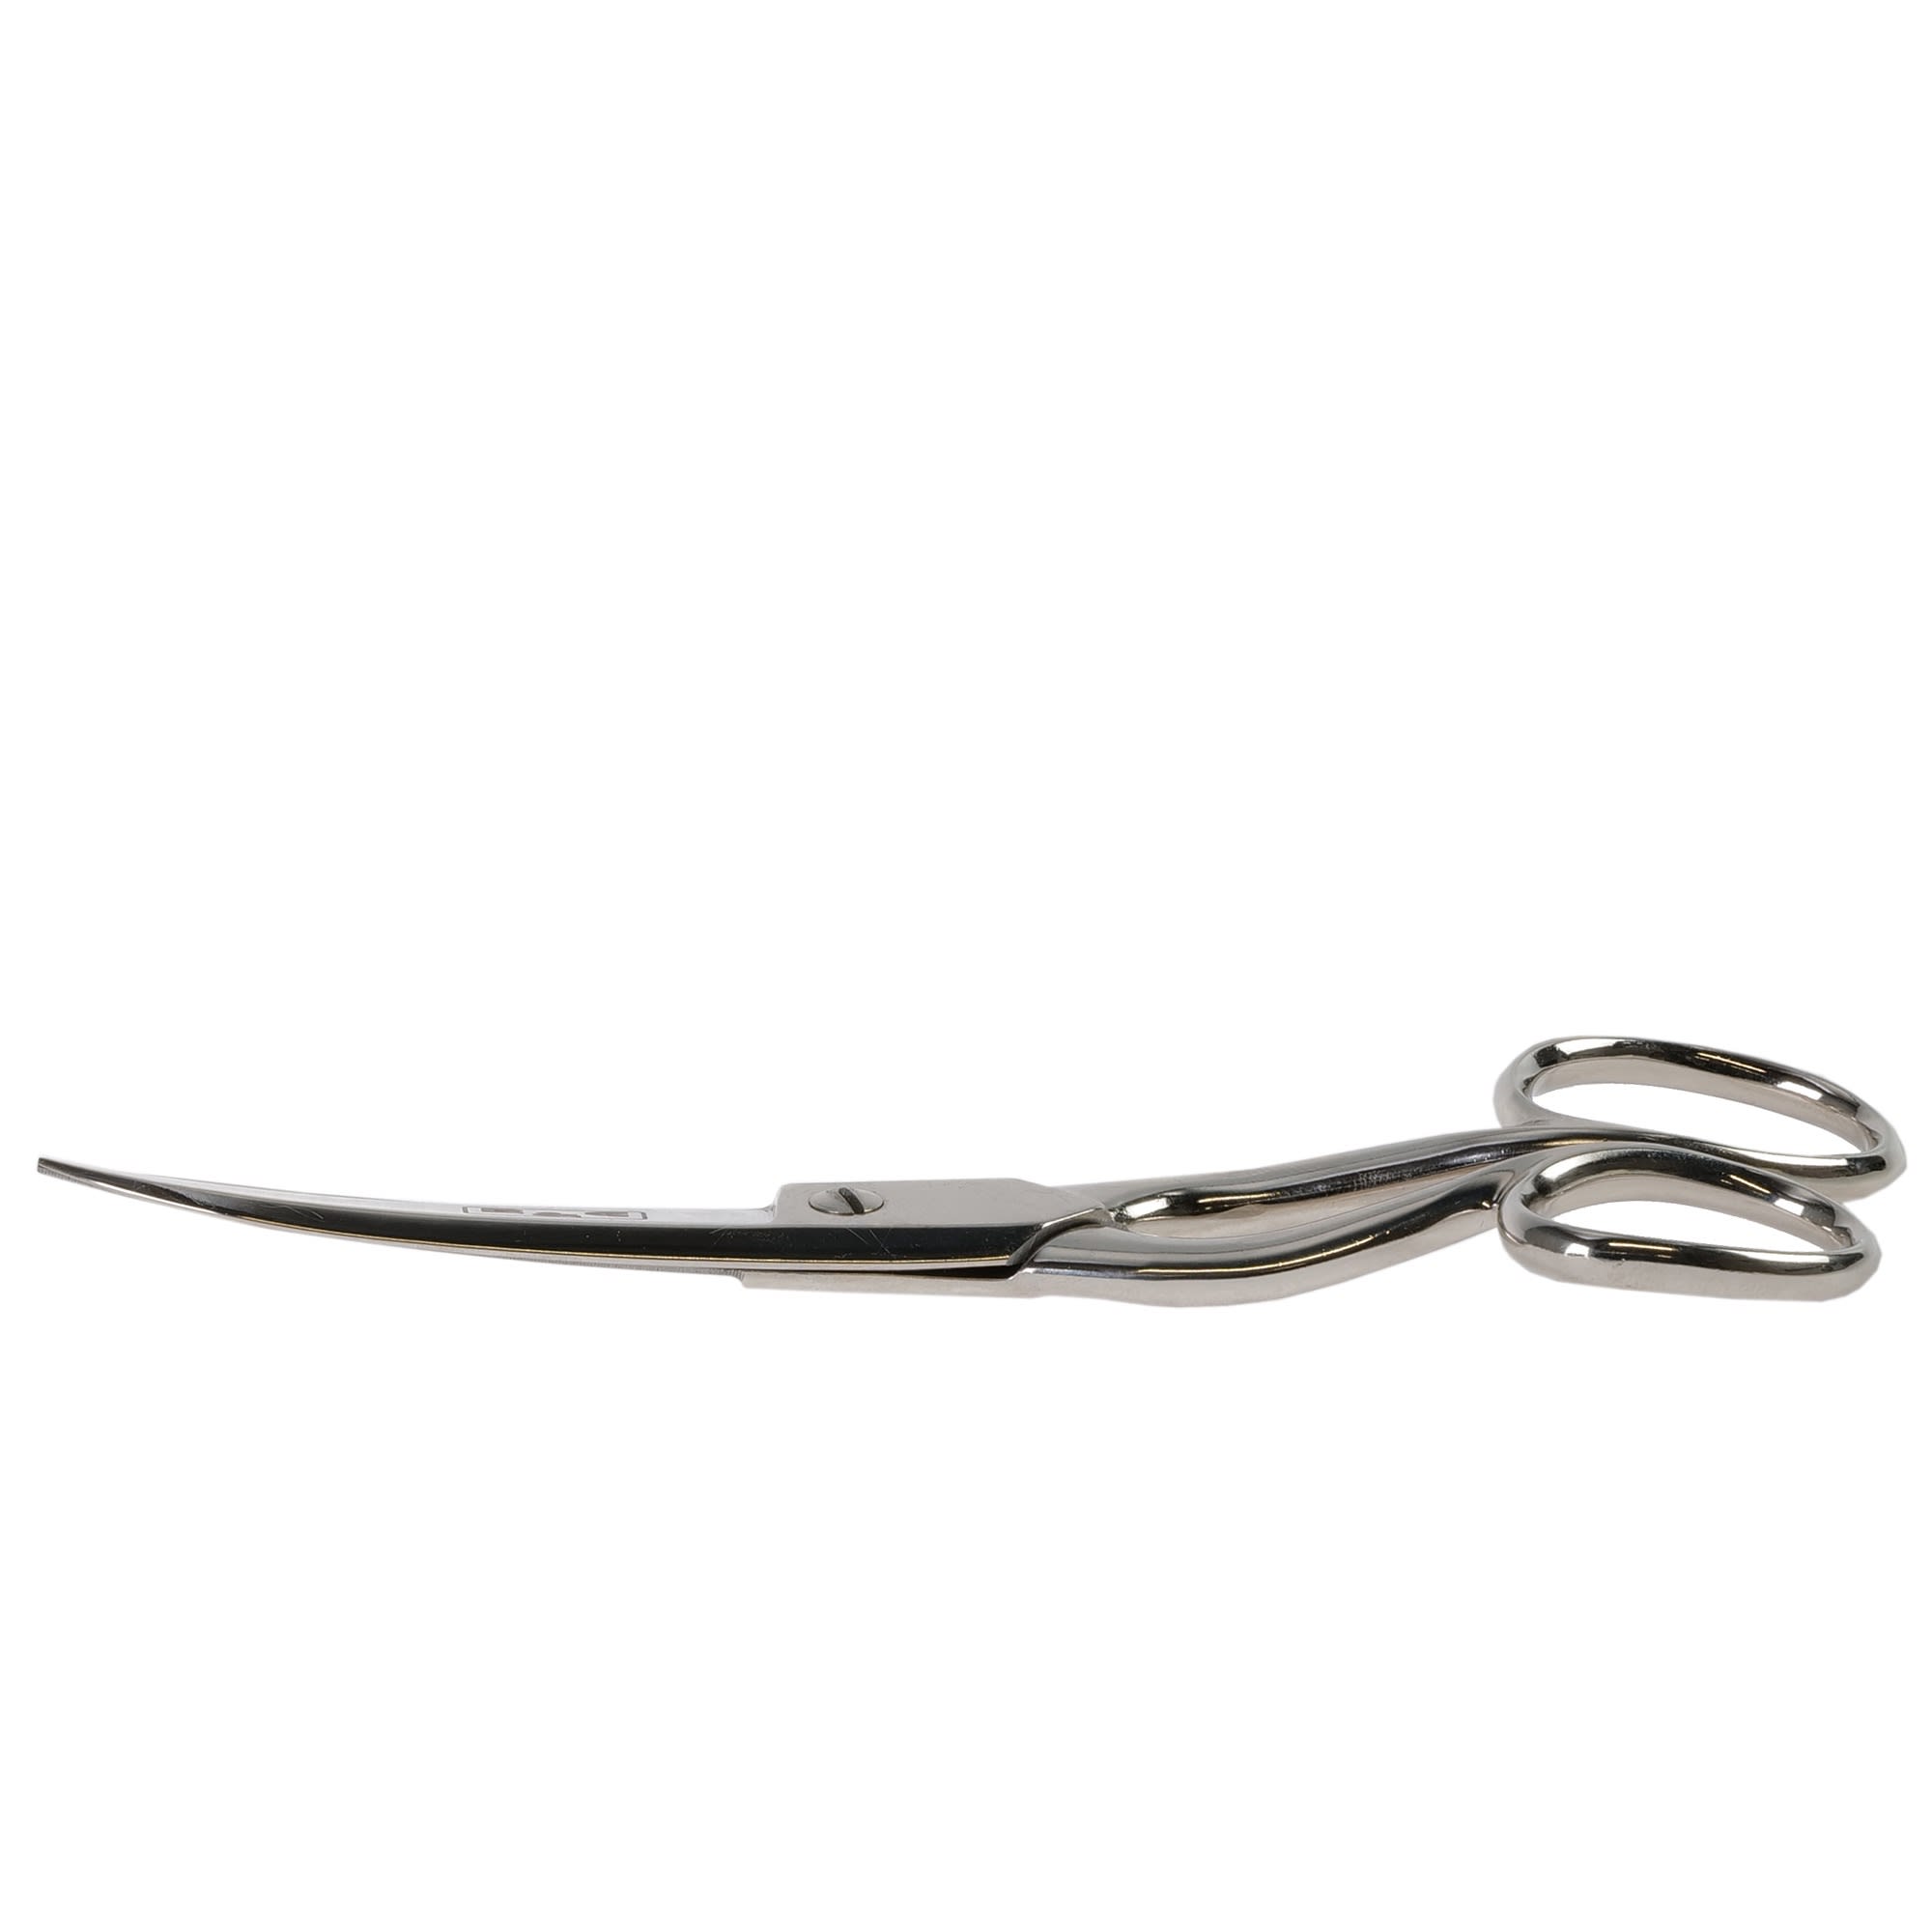 Mould-making scissors (offset handles), 17.8 cm / 7" length, image 4